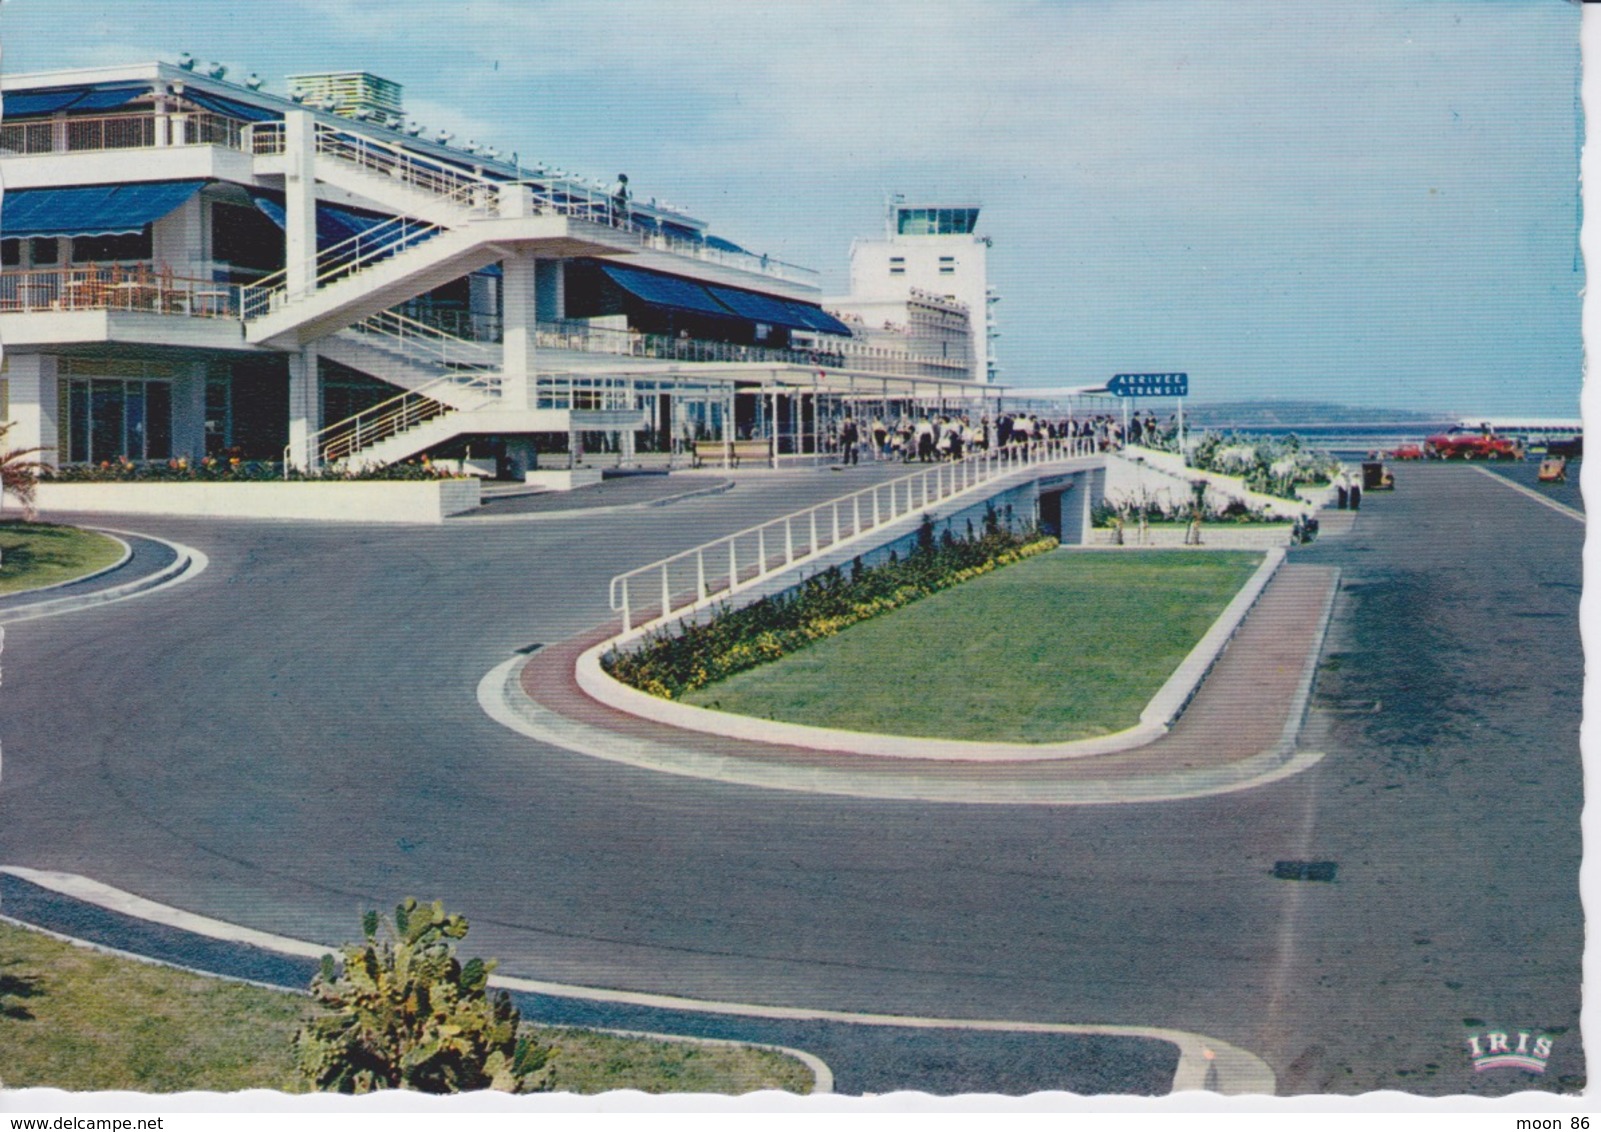 06 - NICE - AÉROPORT DE NICE COTE D'AZUR - Transport (air) - Airport